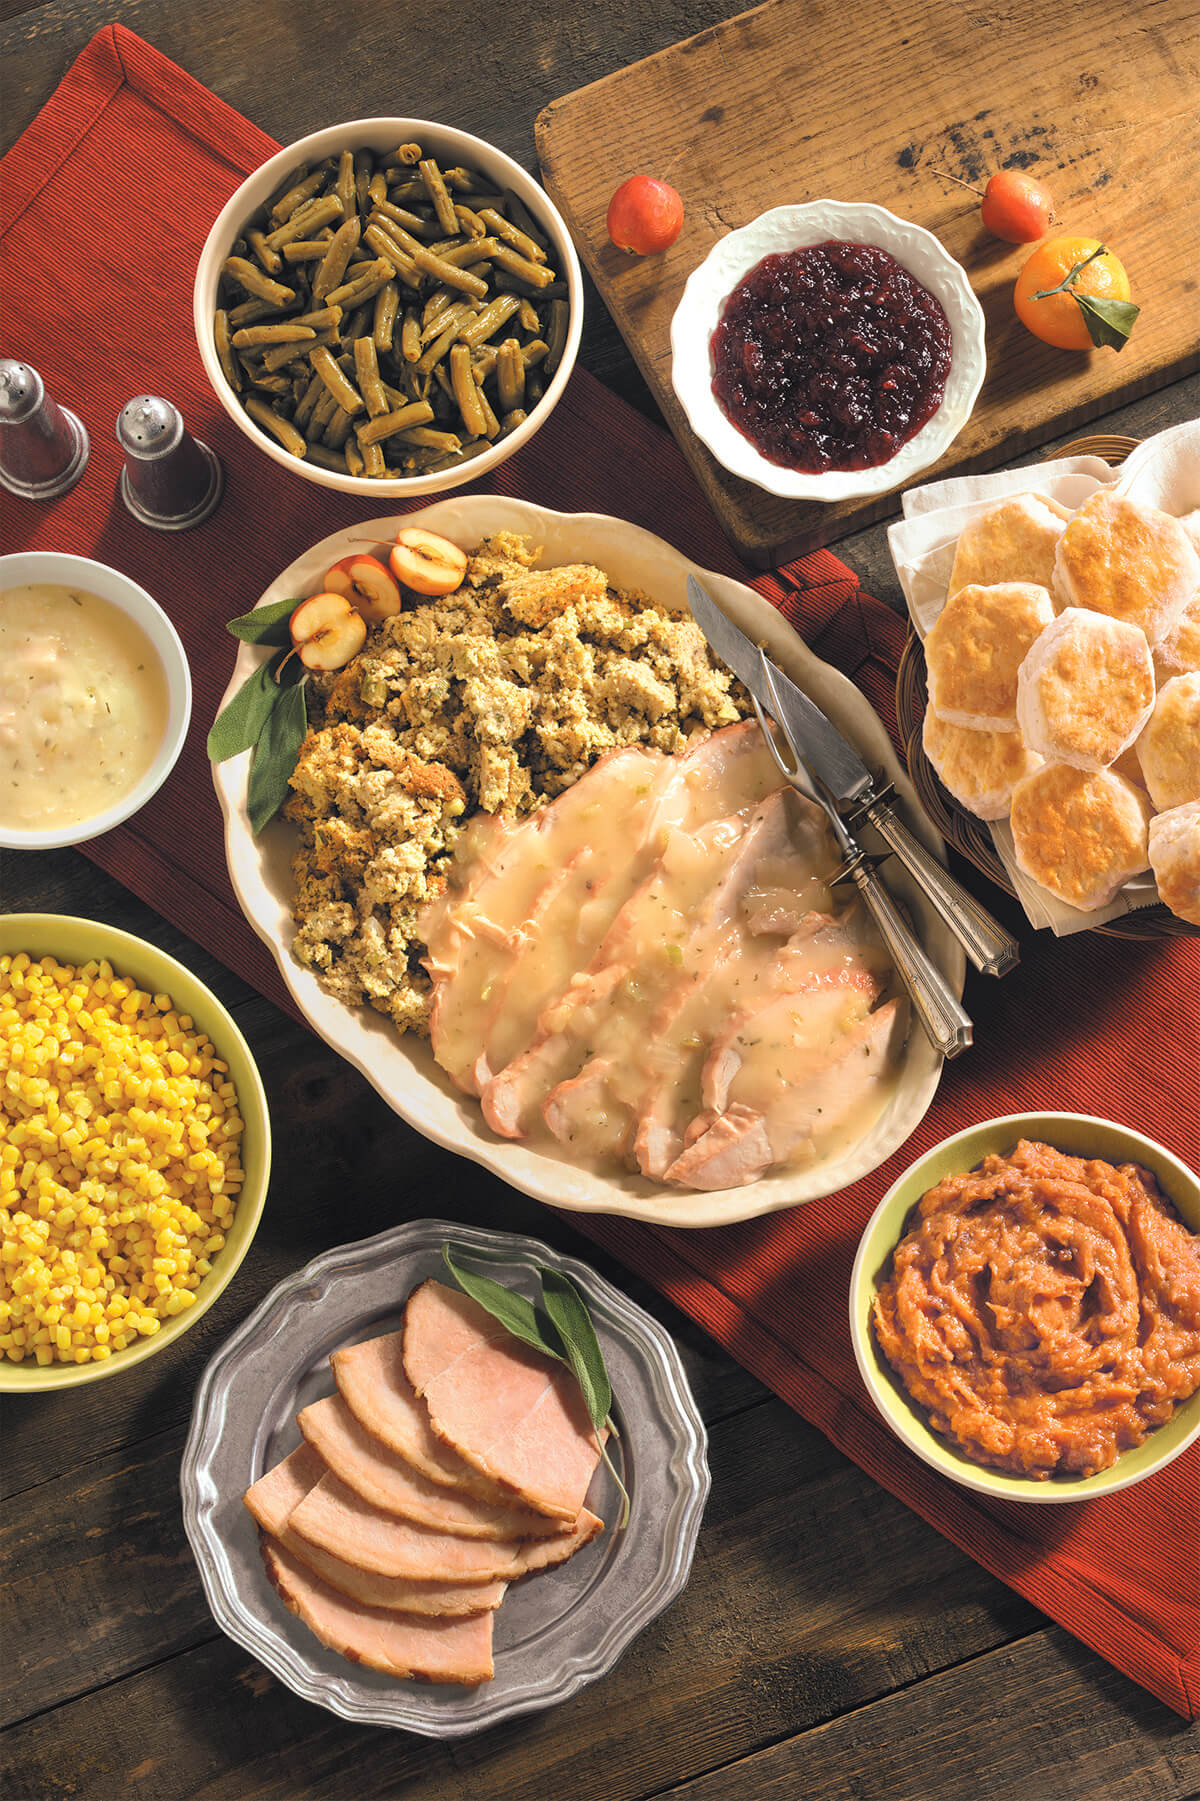 cracker barrel® to serve 1.4 million meals this thanksgiving season